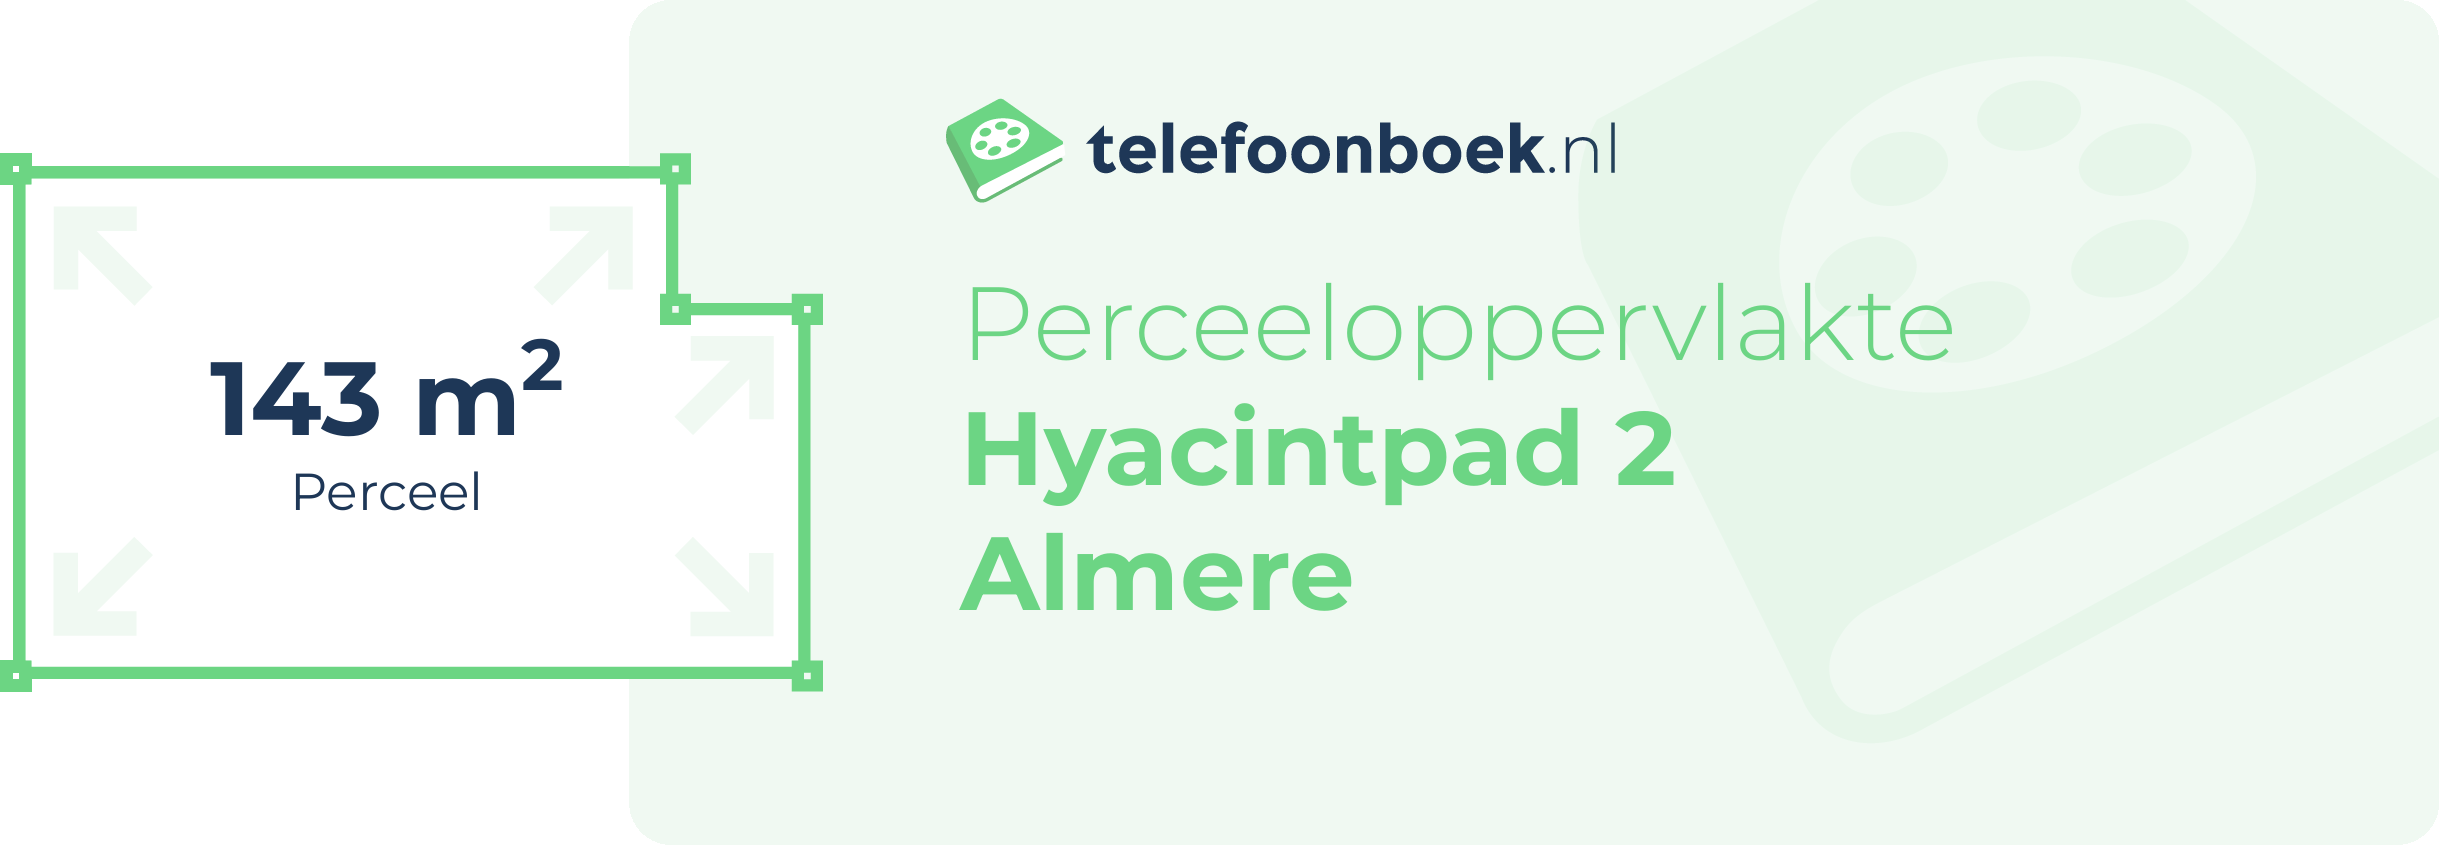 Perceeloppervlakte Hyacintpad 2 Almere